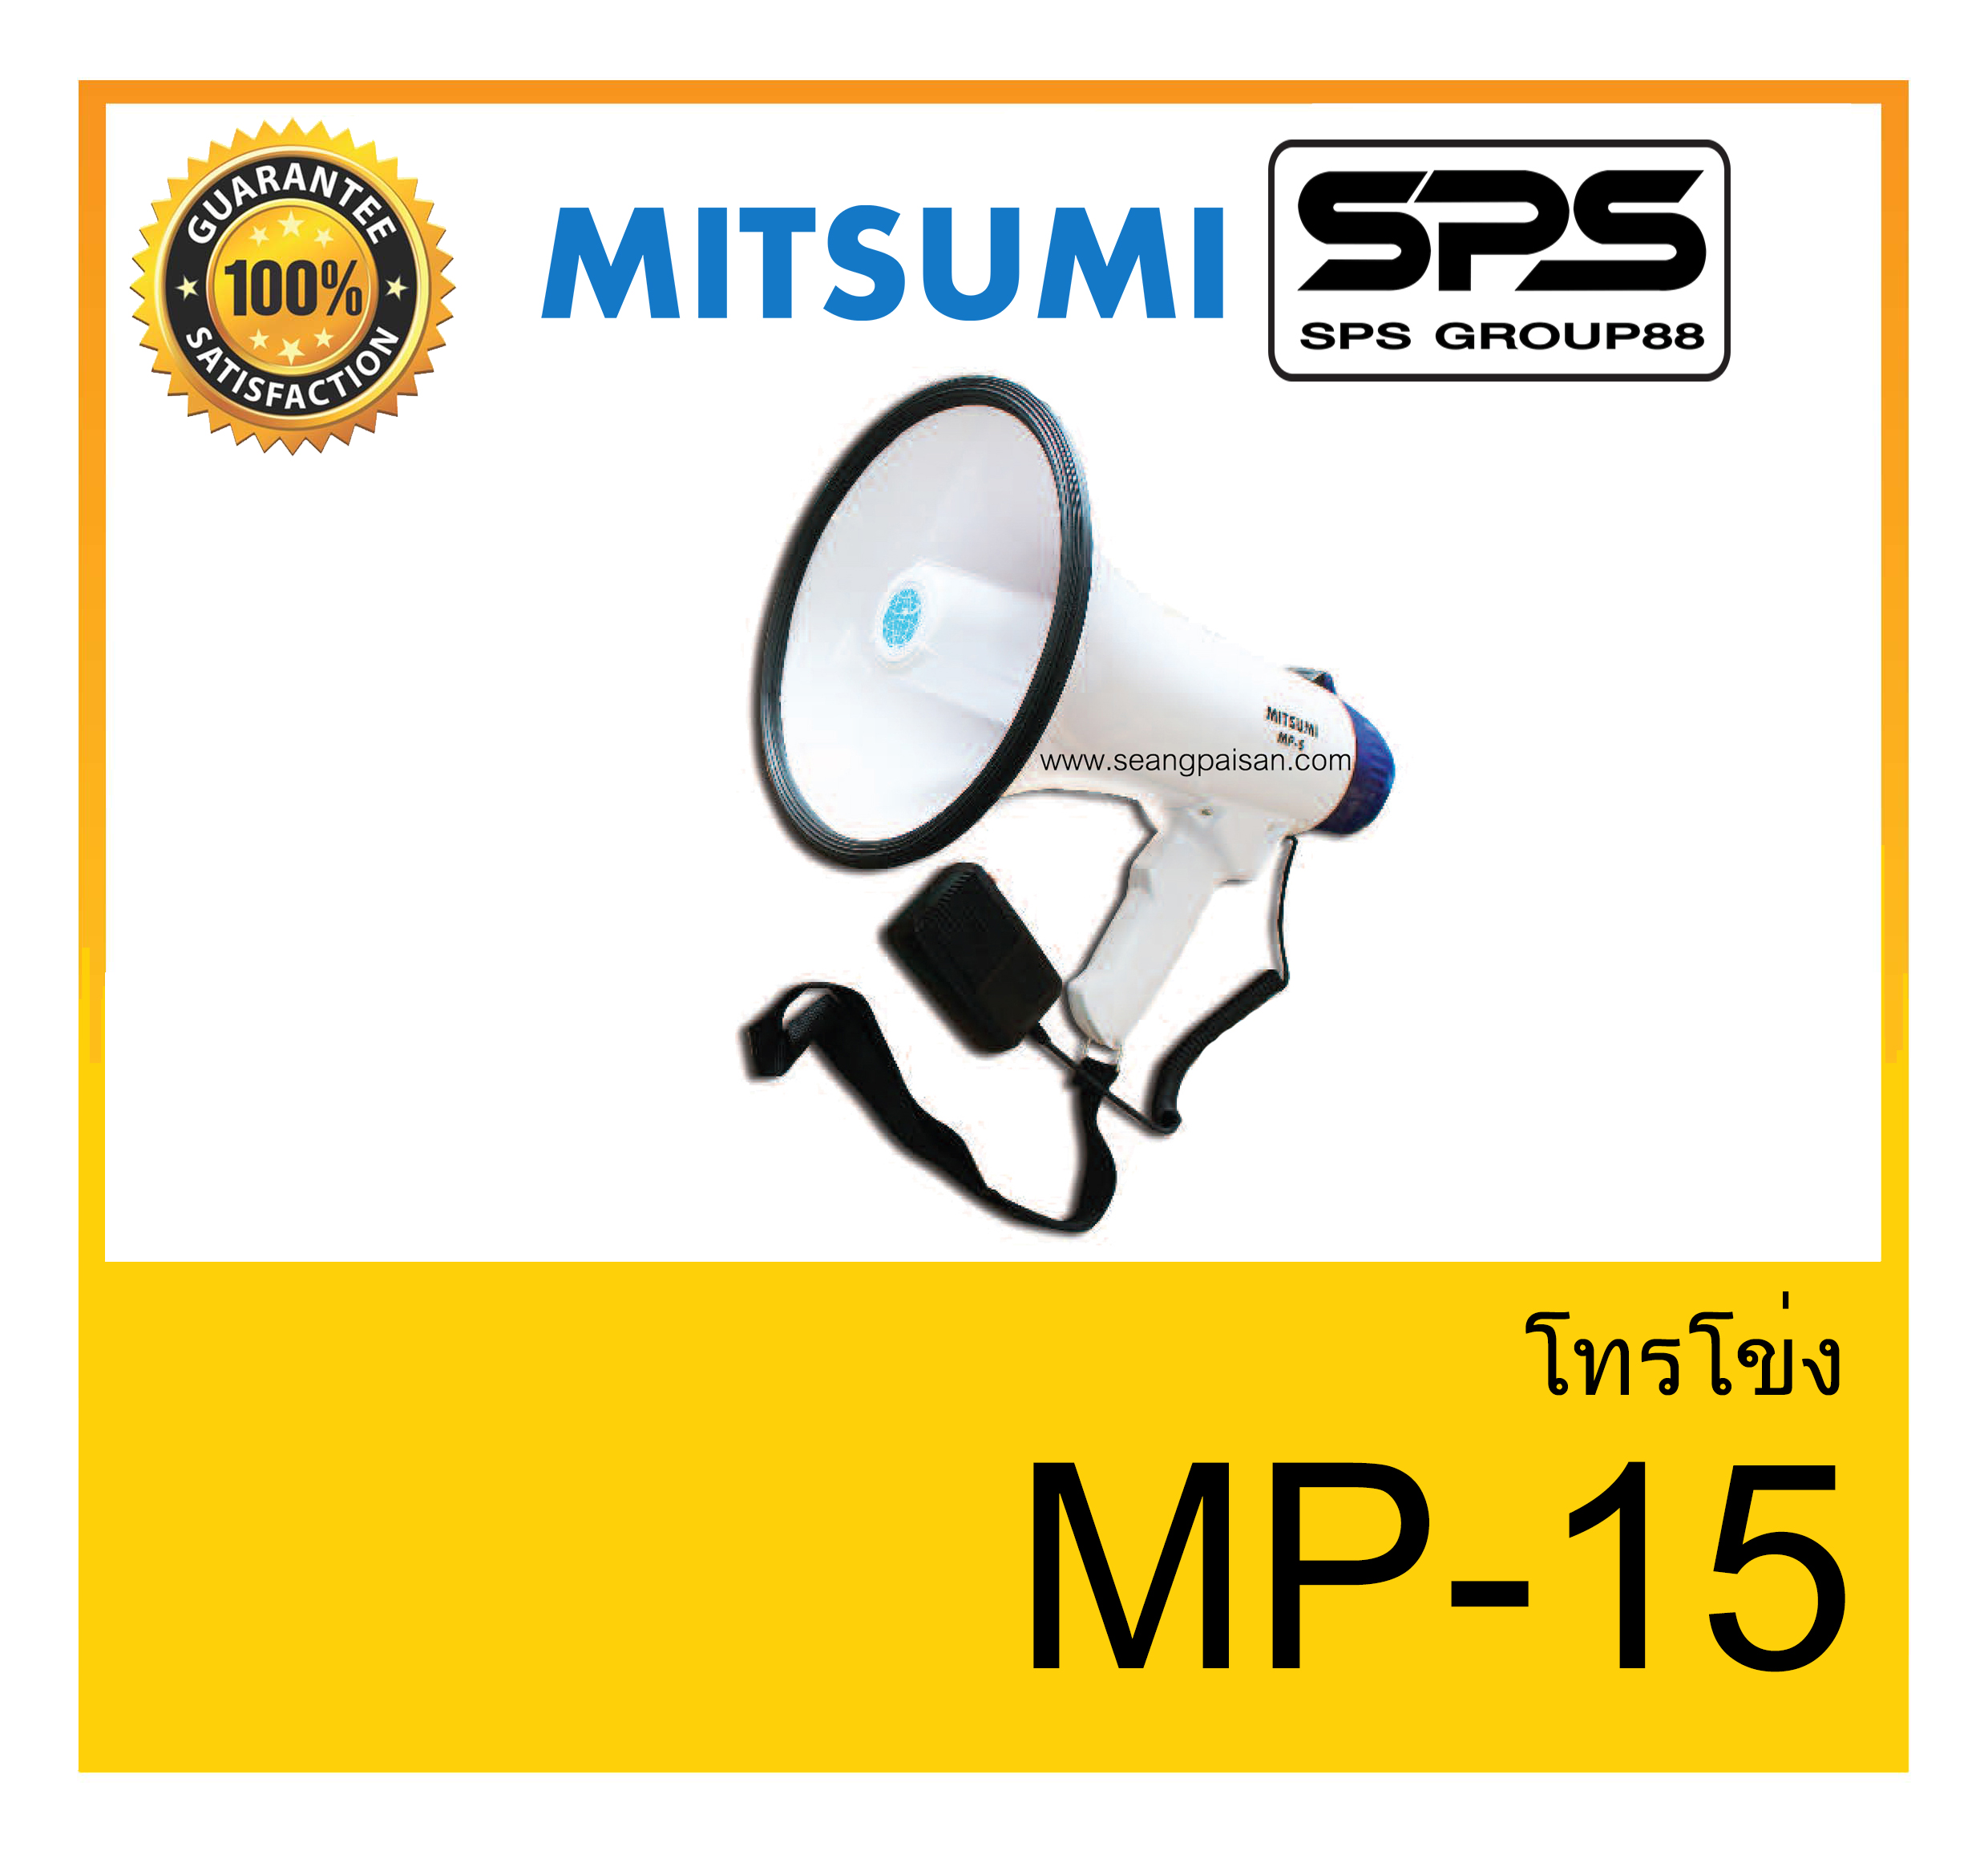 MEGAPHONE โทรโข่ง รุ่น MP-15 ยี่ห้อ MITSUMI ใช้ดี ใช้ทน ของแท้ ราคาถูก พร้อมส่ง